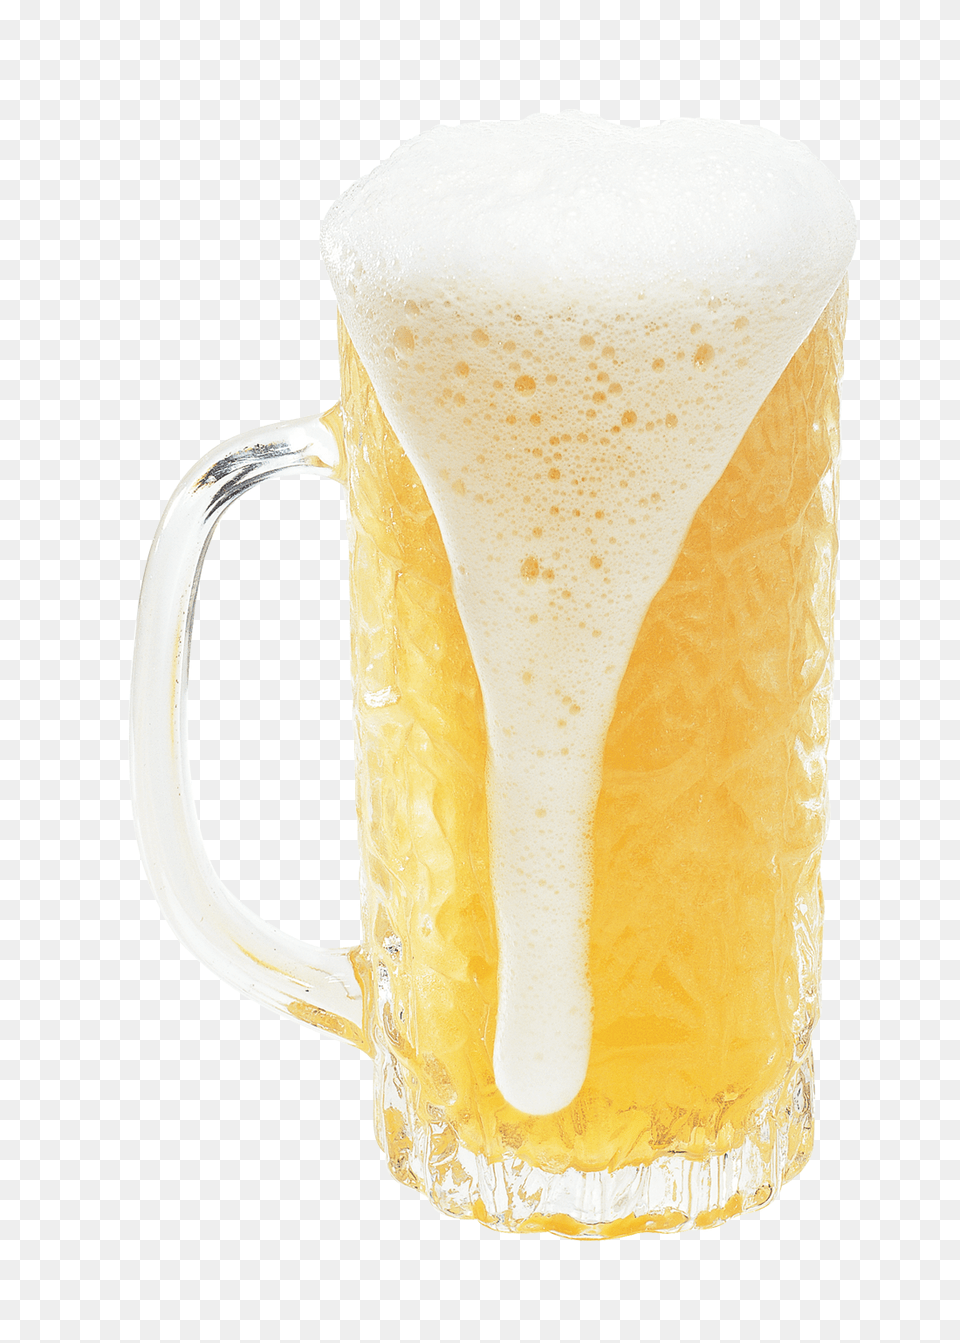 Pngpix Com Mug Of Beer Image, Alcohol, Beverage, Cup, Glass Free Png